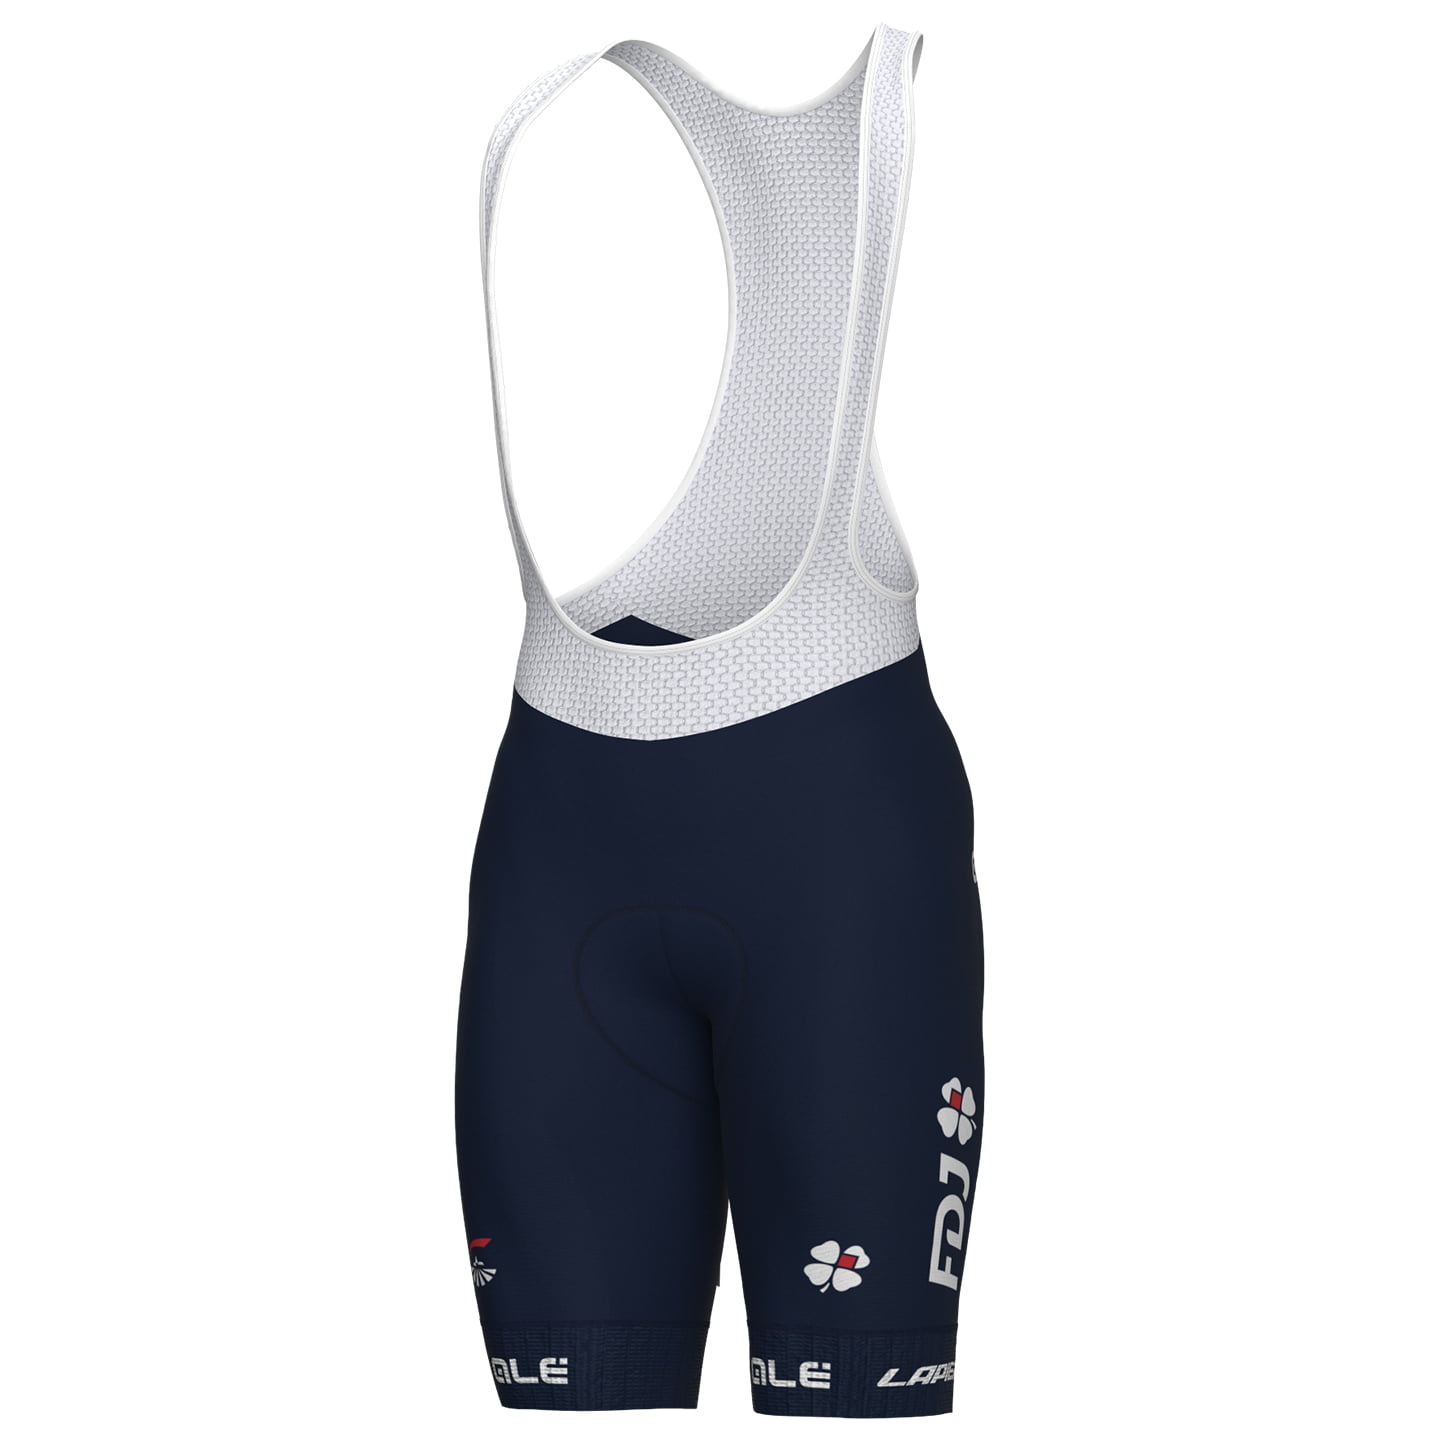 GROUPAMA - FDJ 2023 Bib Shorts, for men, size L, Cycle shorts, Cycling clothing